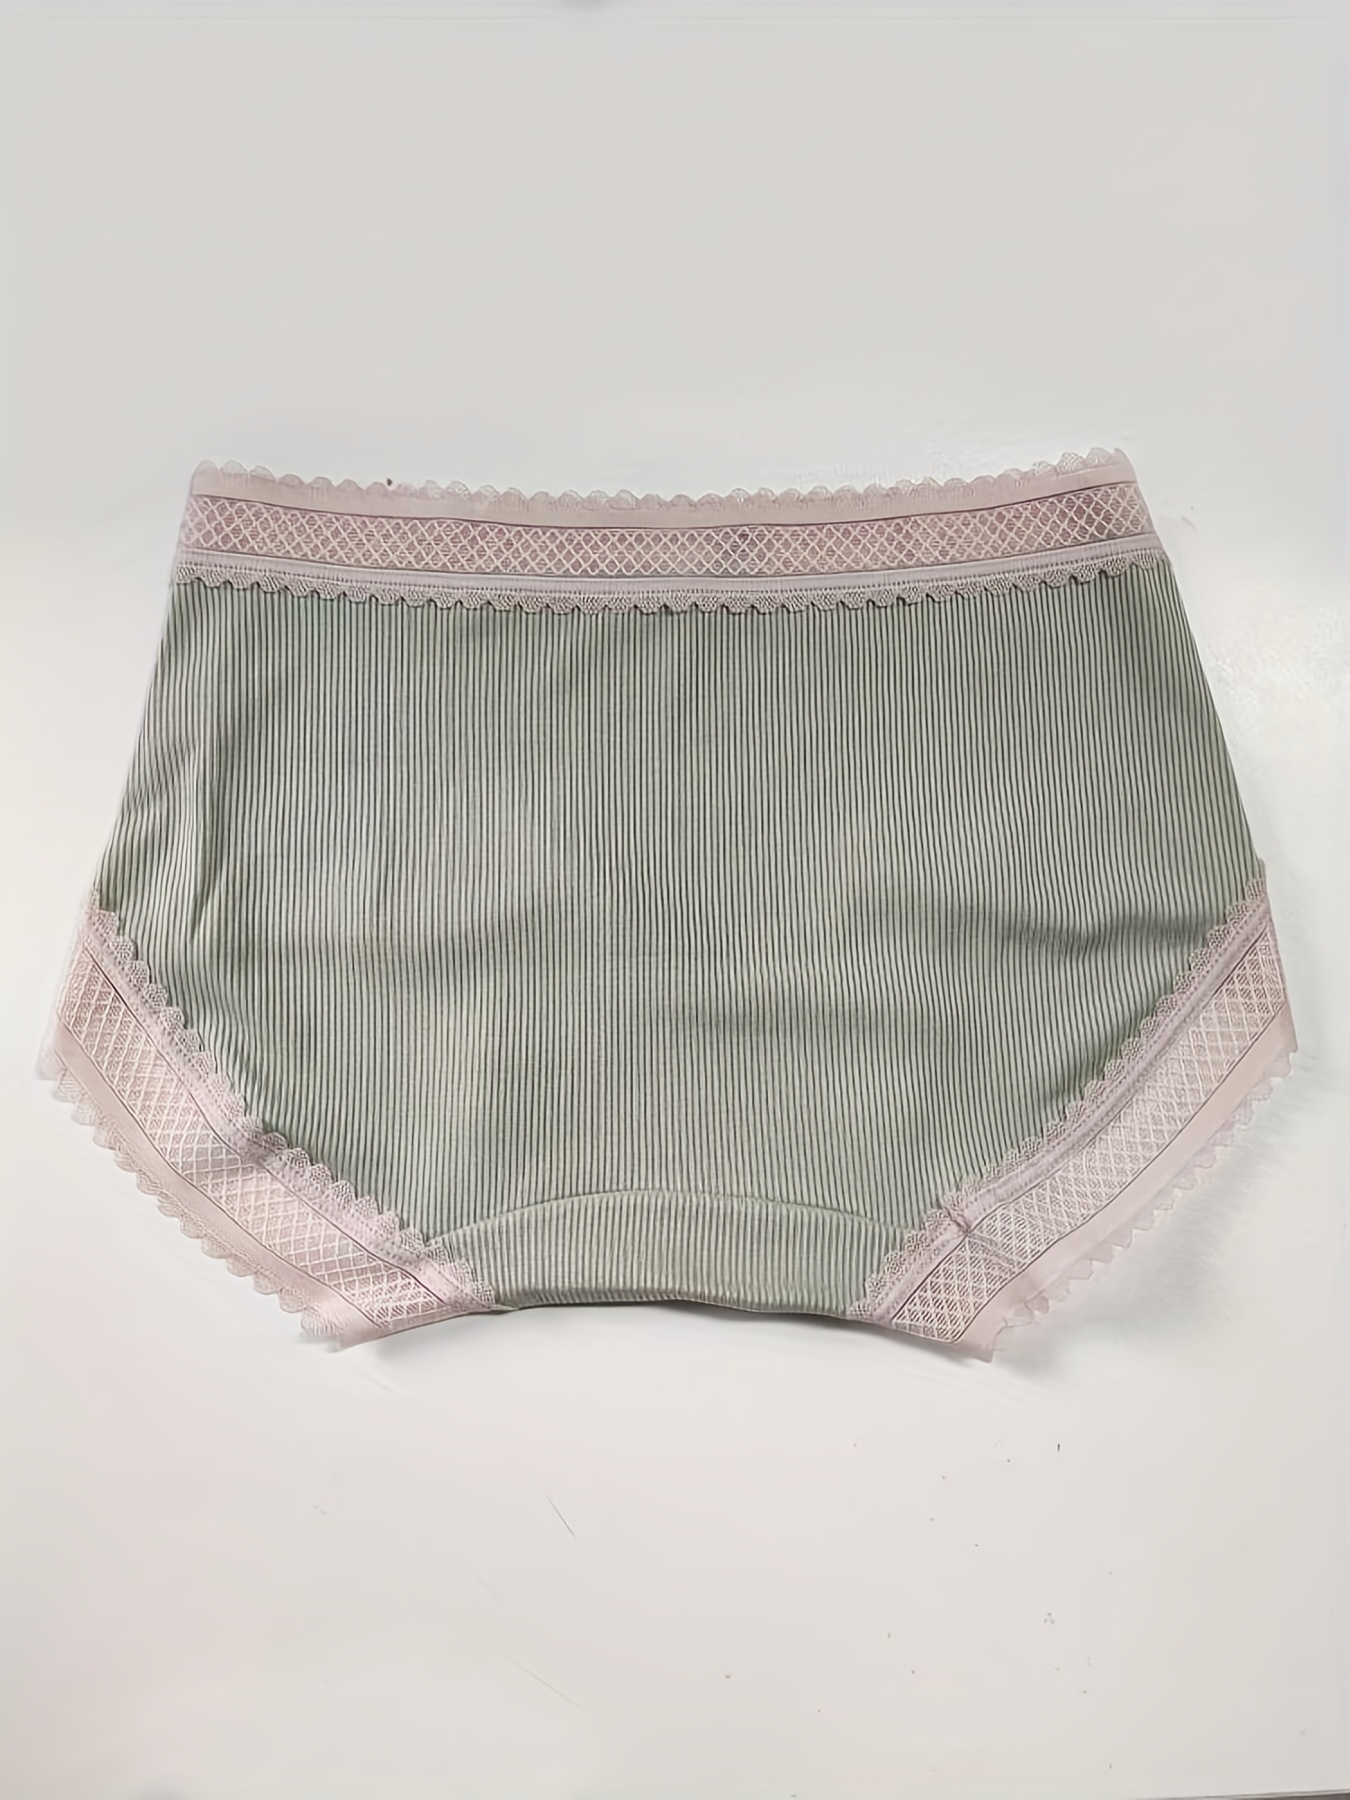 Seamless Sexy Lace Briefs Solid Underwear